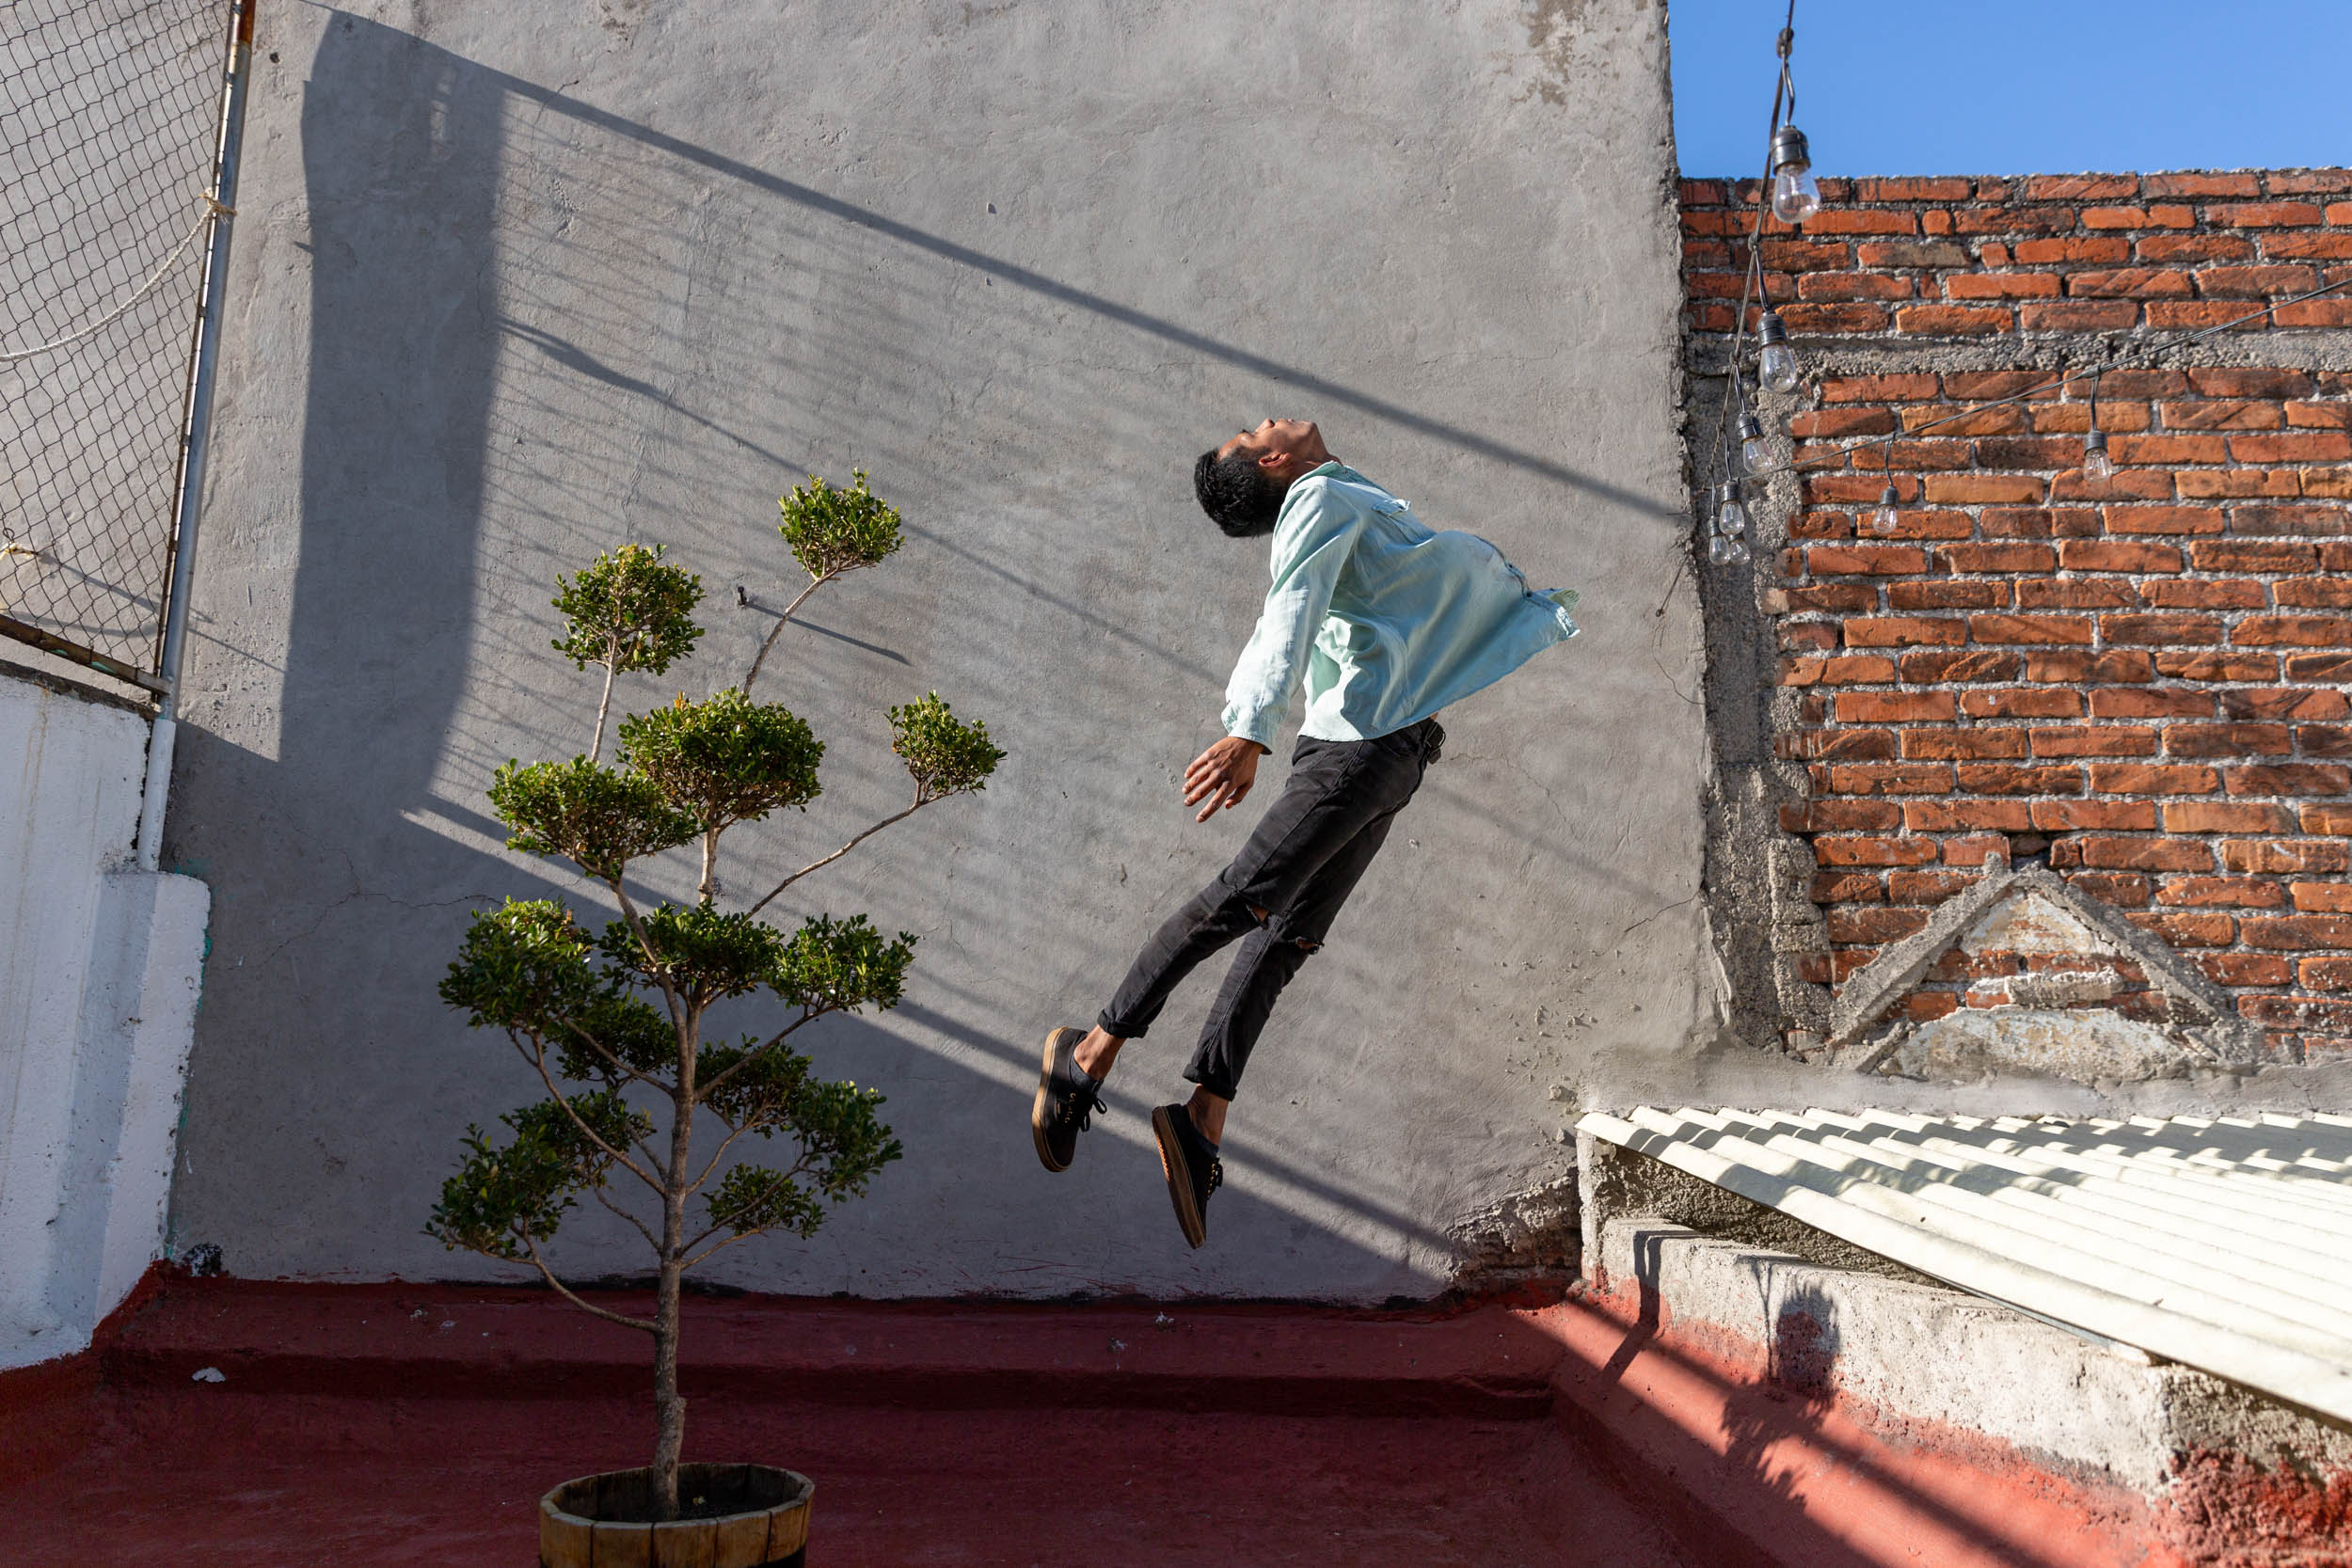 Baruk Serna for Dancers on Rooftops by Ben Hopper (2022)